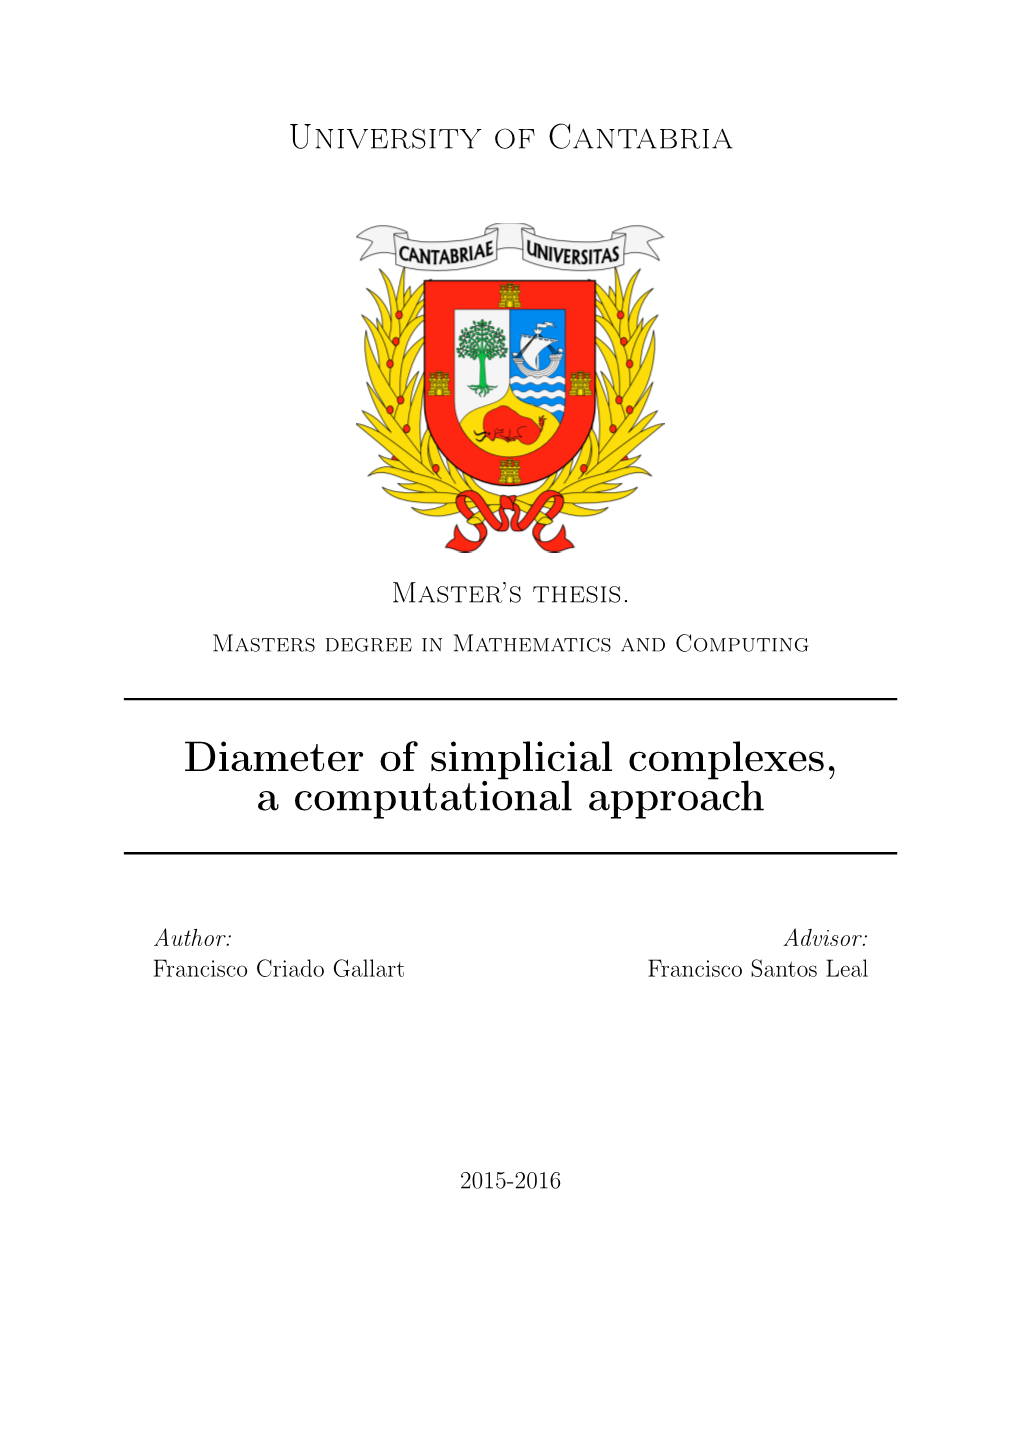 Diameter of Simplicial Complexes, a Computational Approach